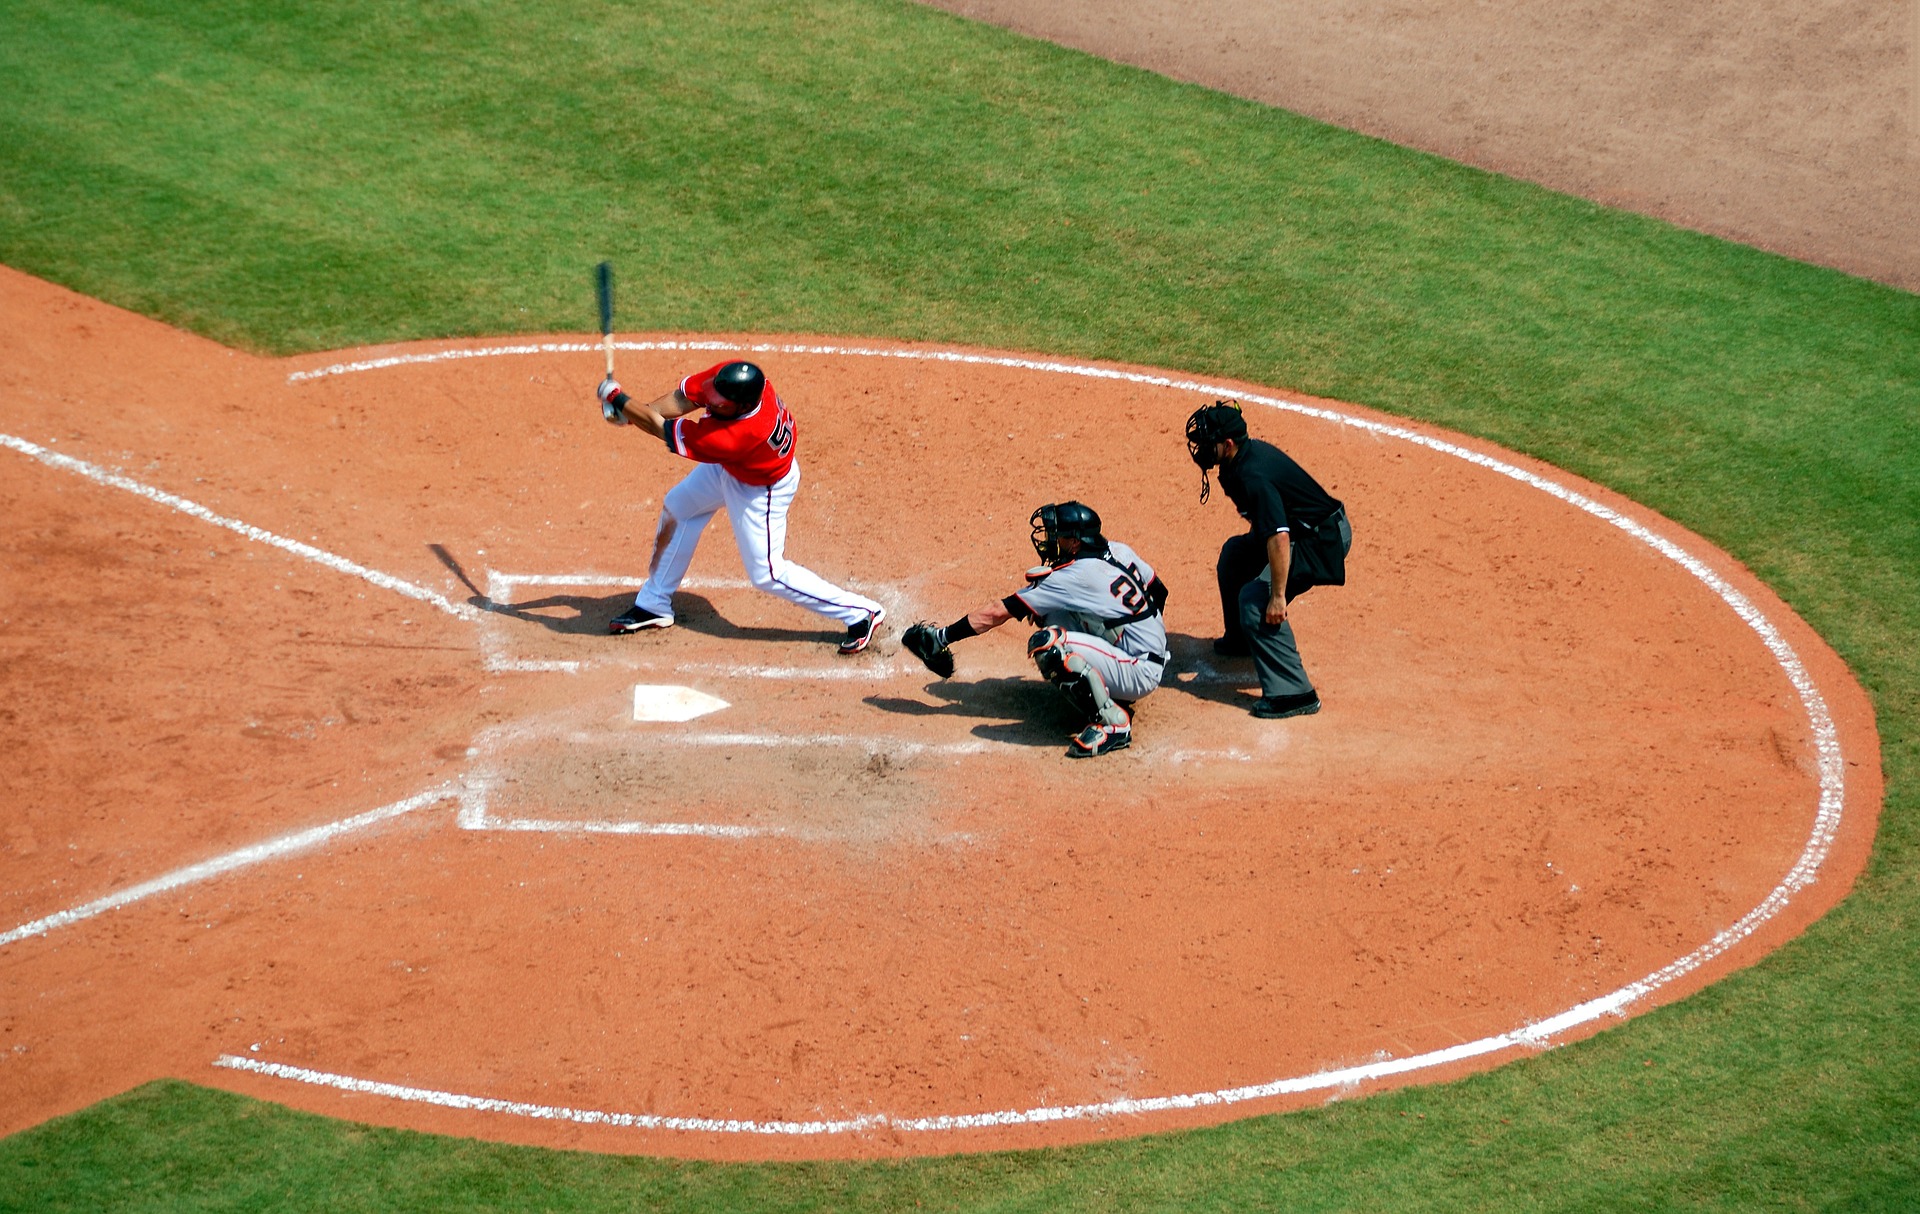 Baseball batter hitting a ball while the catcher stands behinds him: Baseball vs Softball [MindfuseBaseball.com]